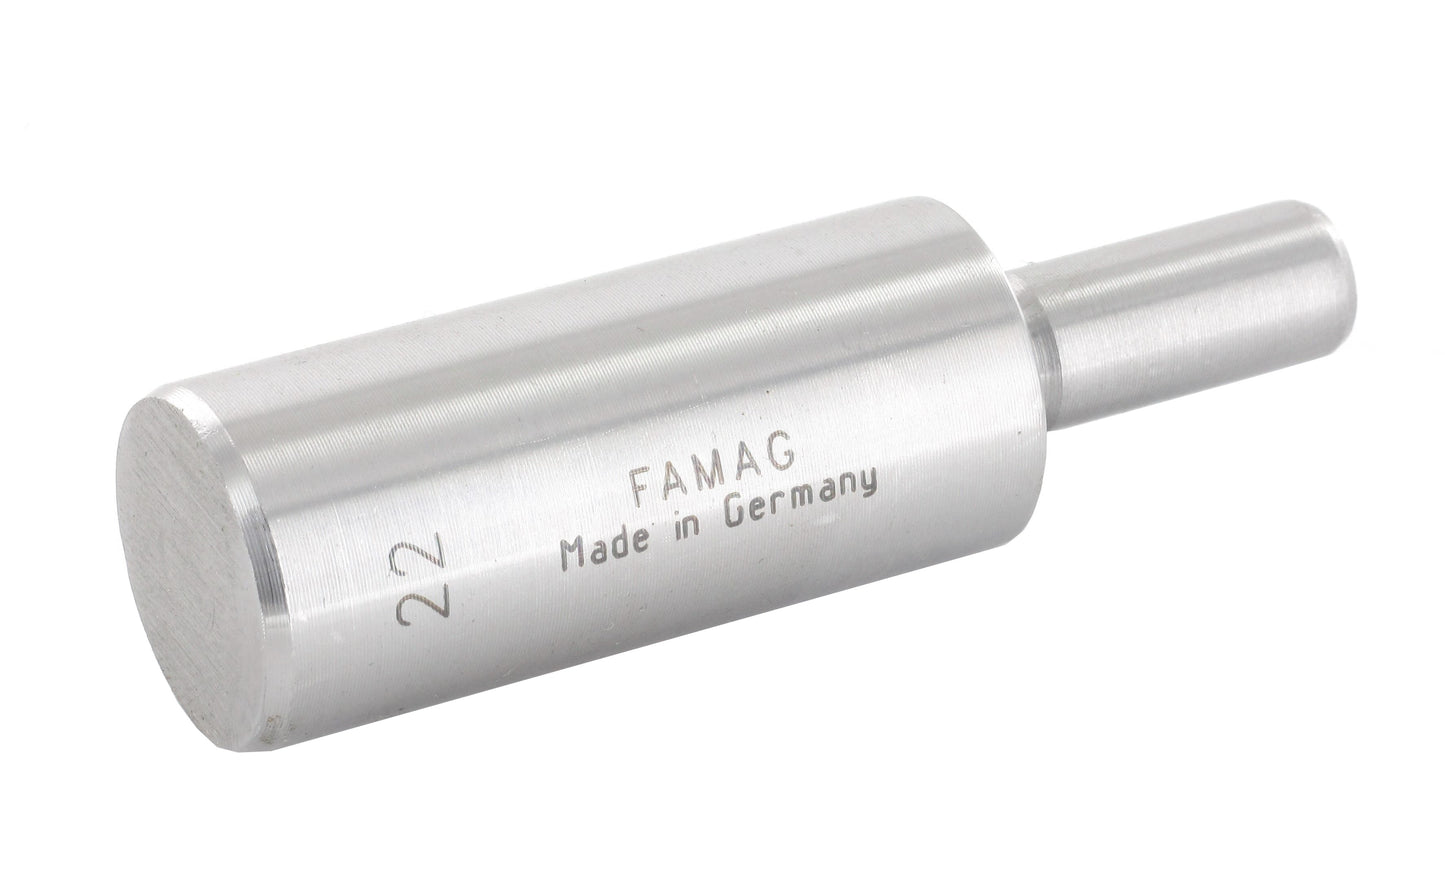 FAMAG 13 mm Guding Pin For Bormax 2.0 Prima 1614 Long Series 44.45mm - 120mm, 1619013